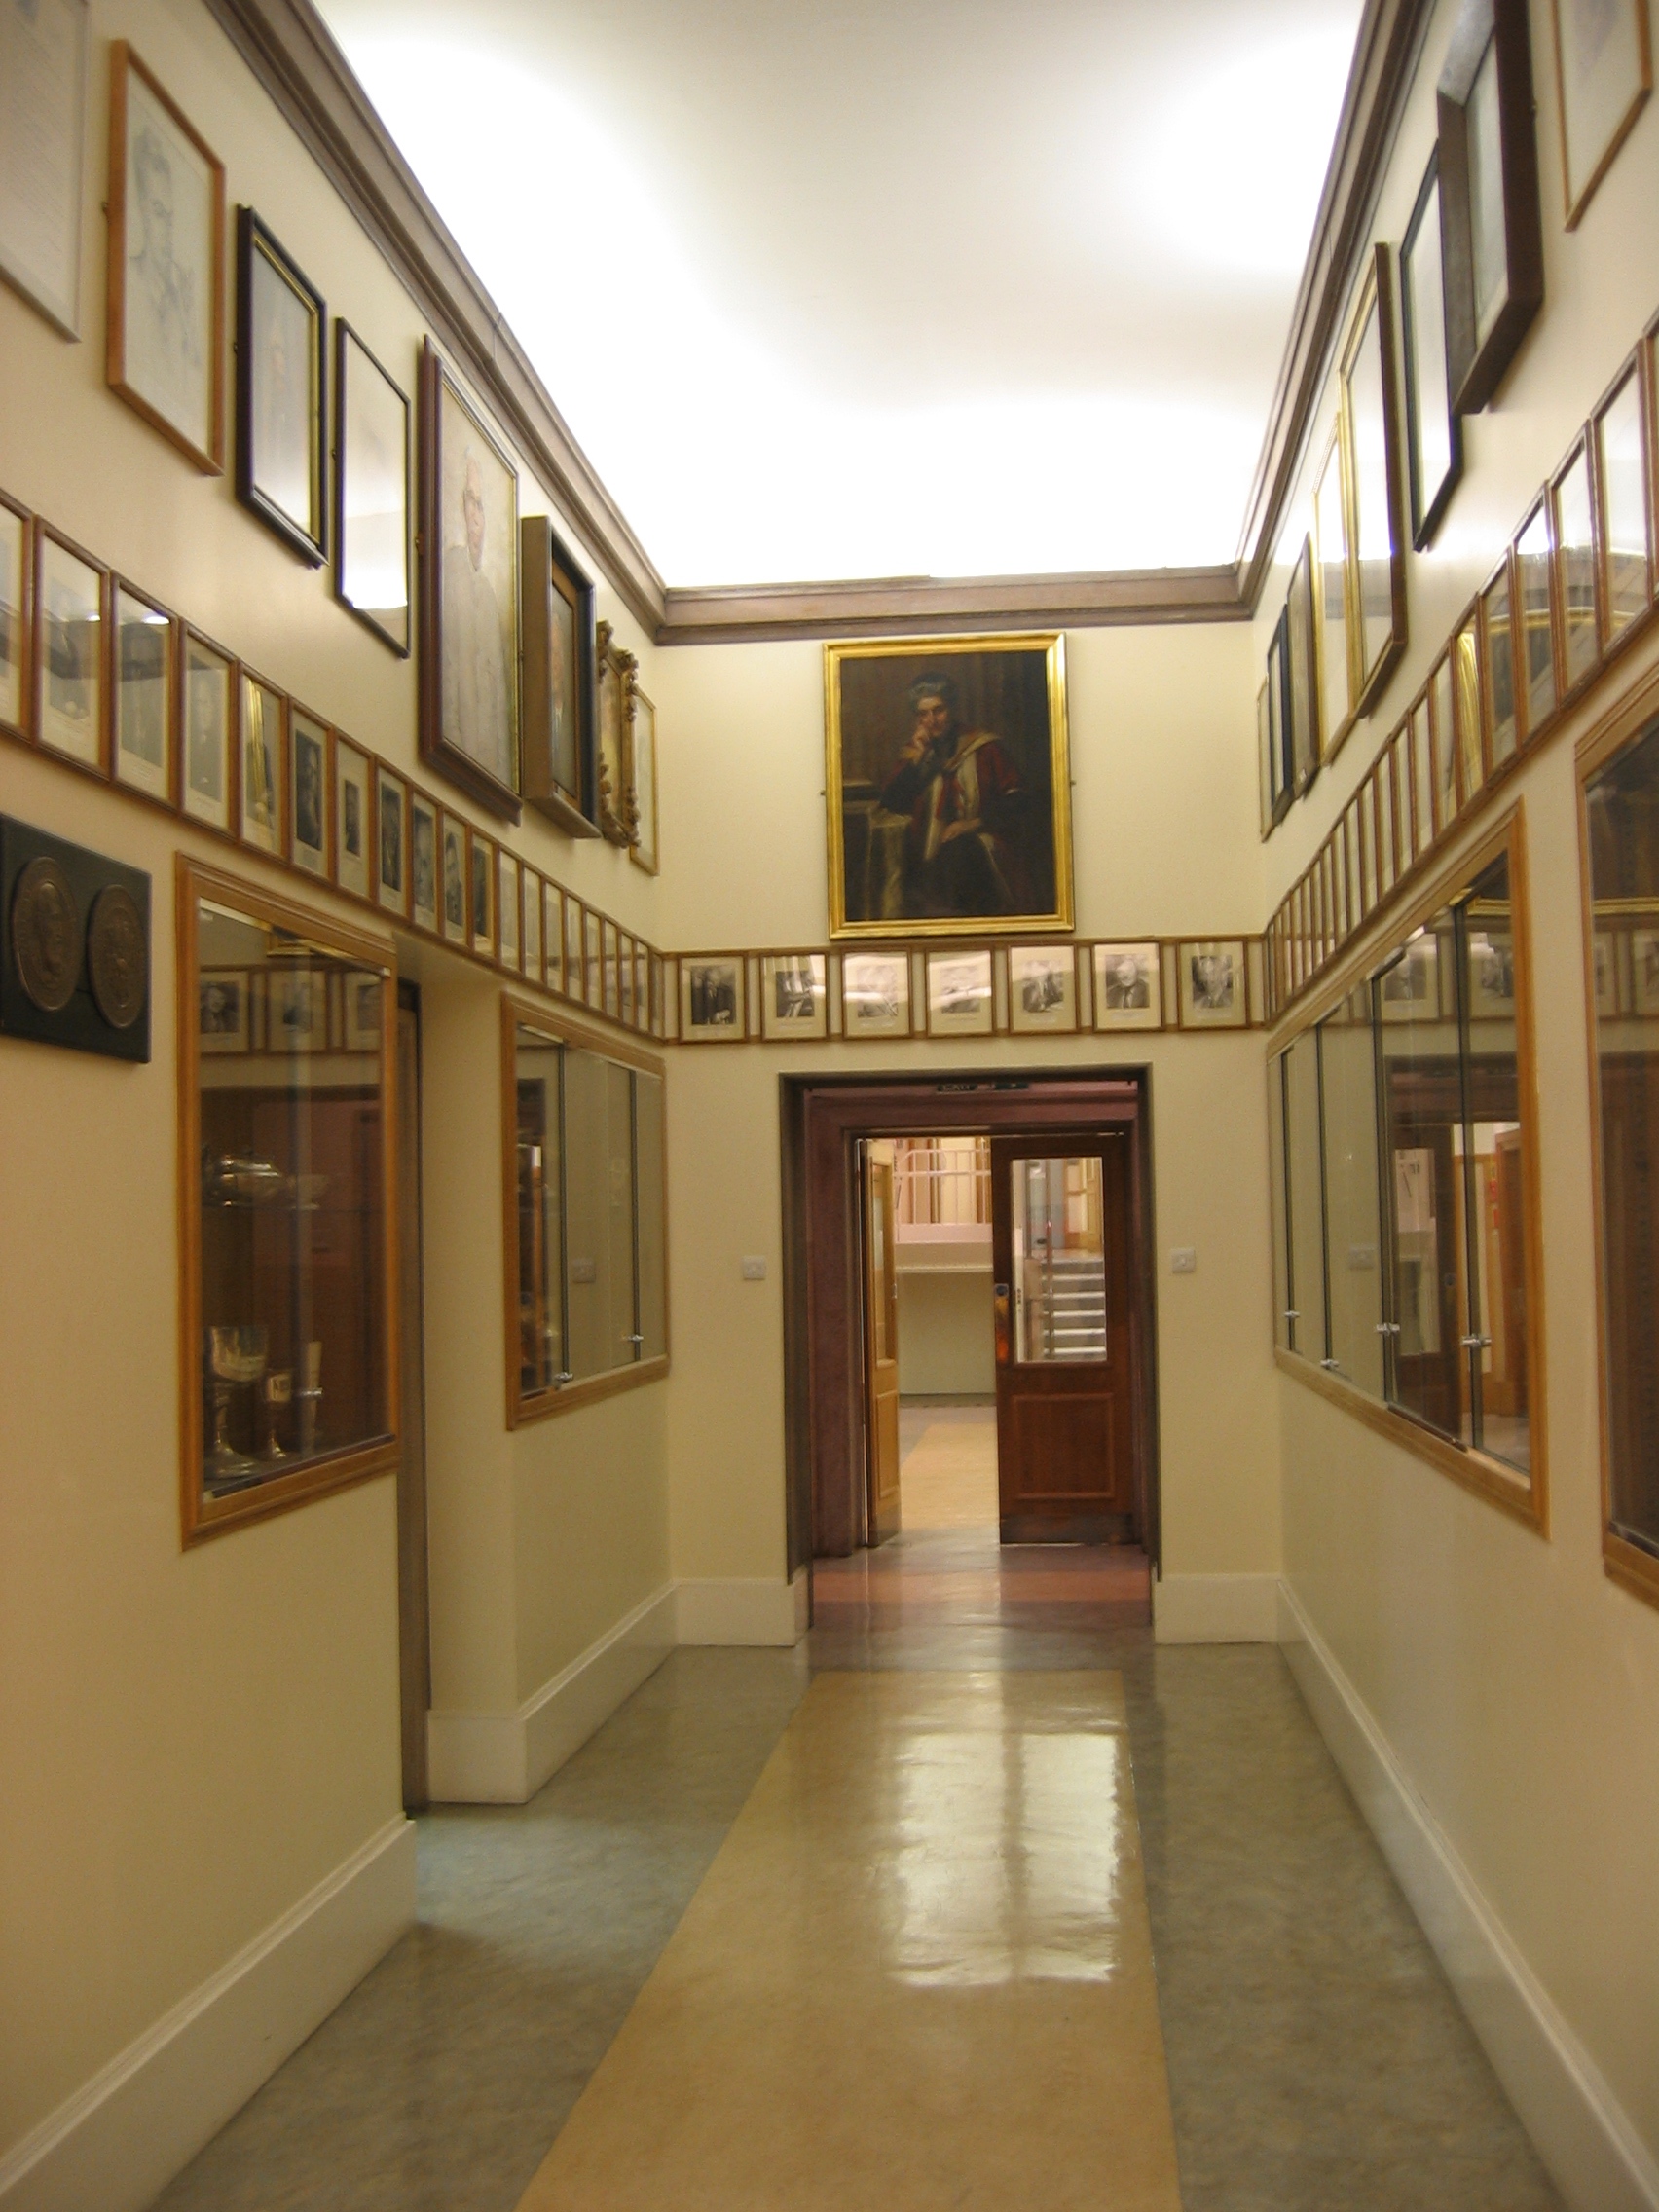 File:Inside LSE Old Building.jpg - Wikimedia Commons